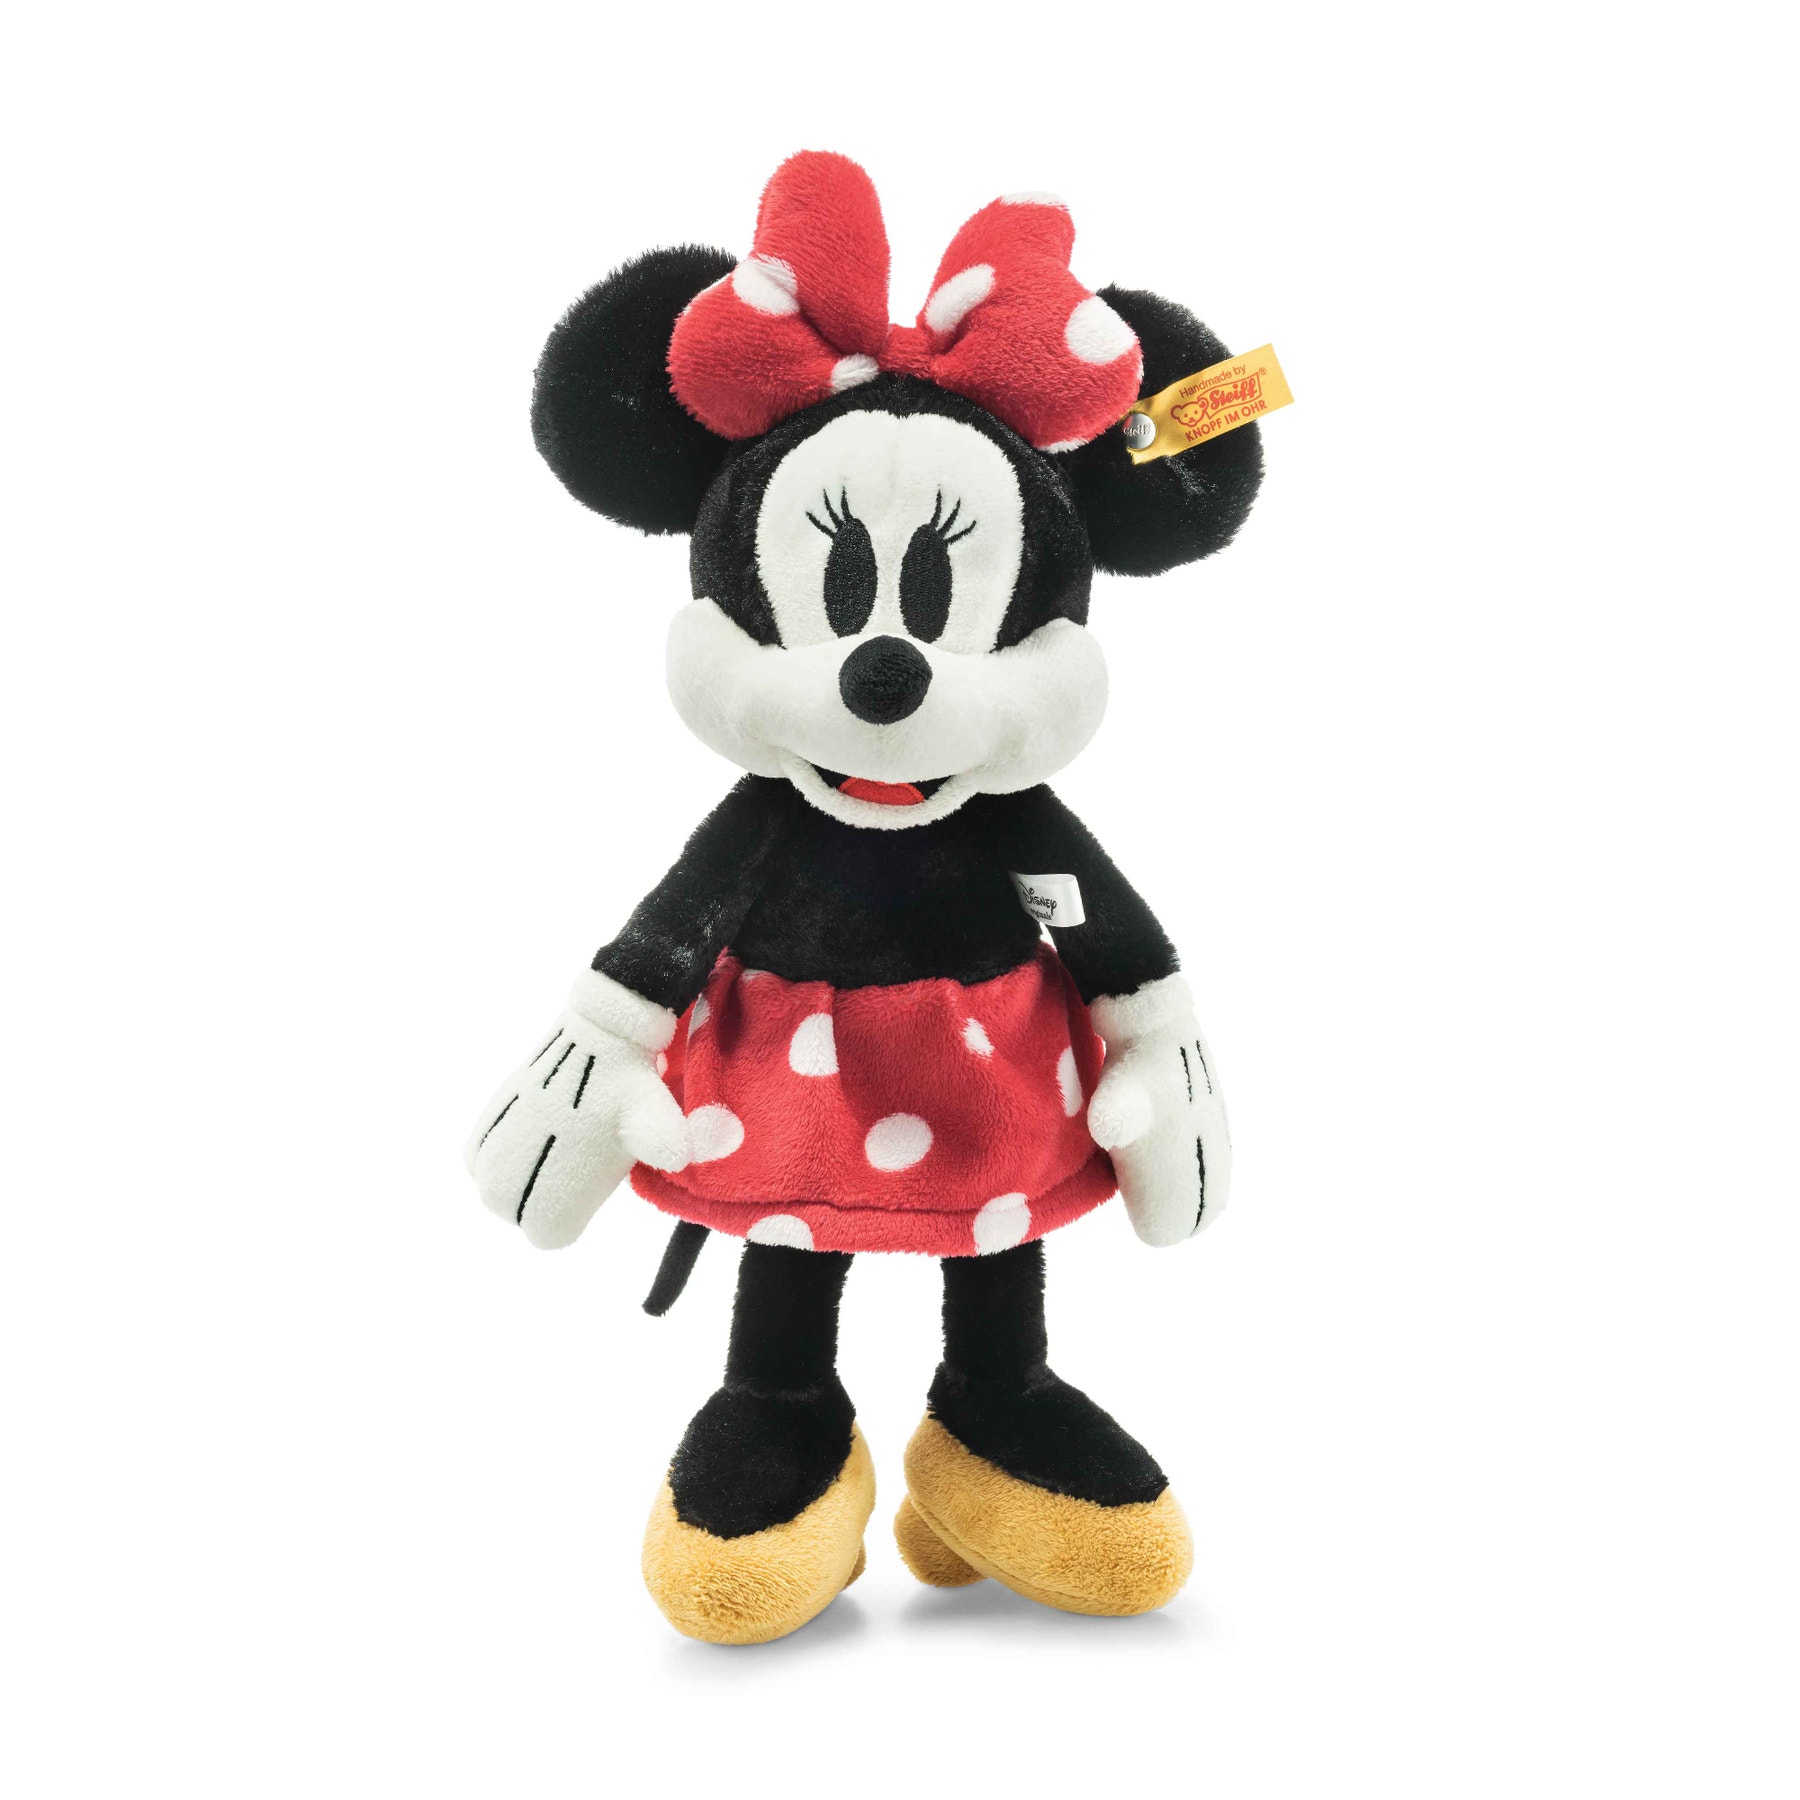 Disney's Minnie Mouse, 12 in, multicoloured - Steiff.com